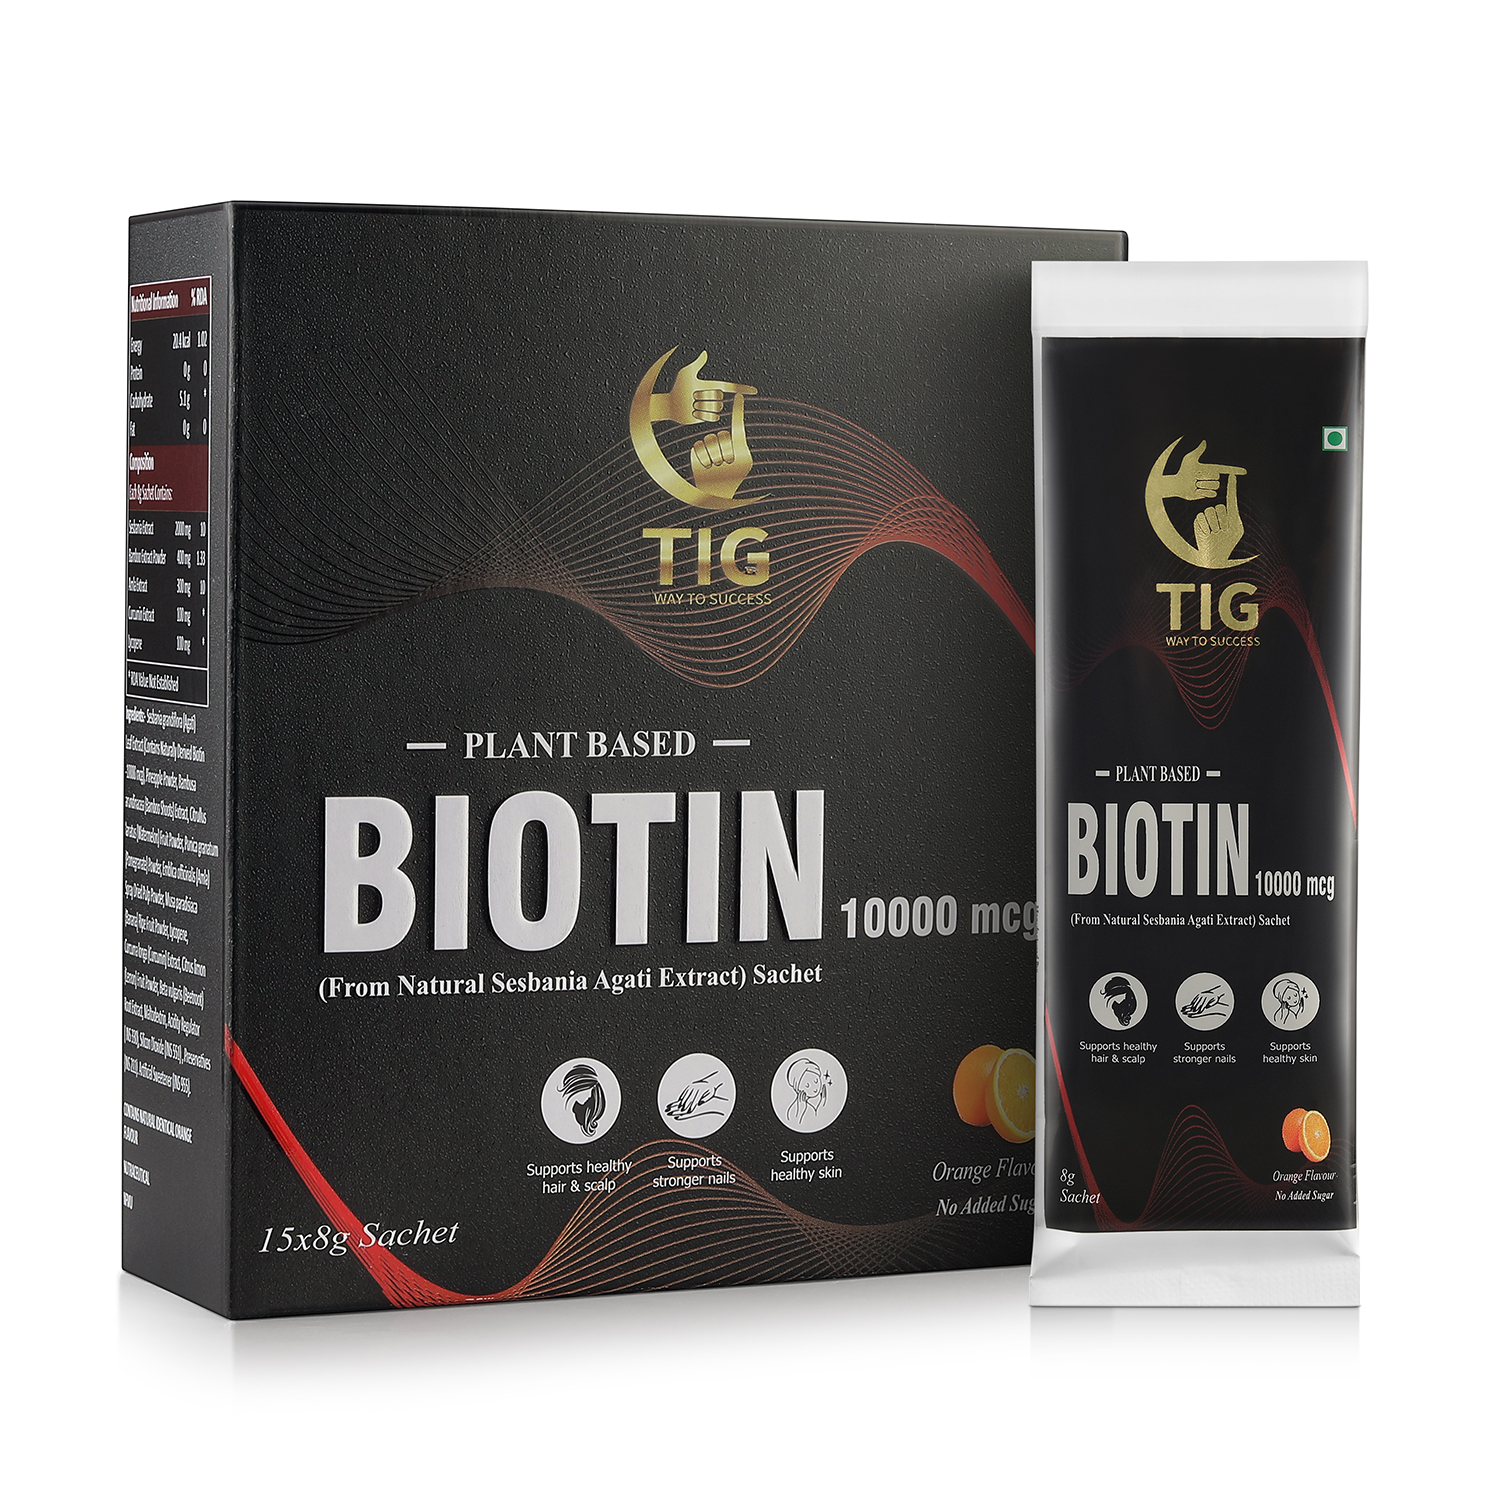 TIG BIOTIN 15 SECHET (Plant Based)